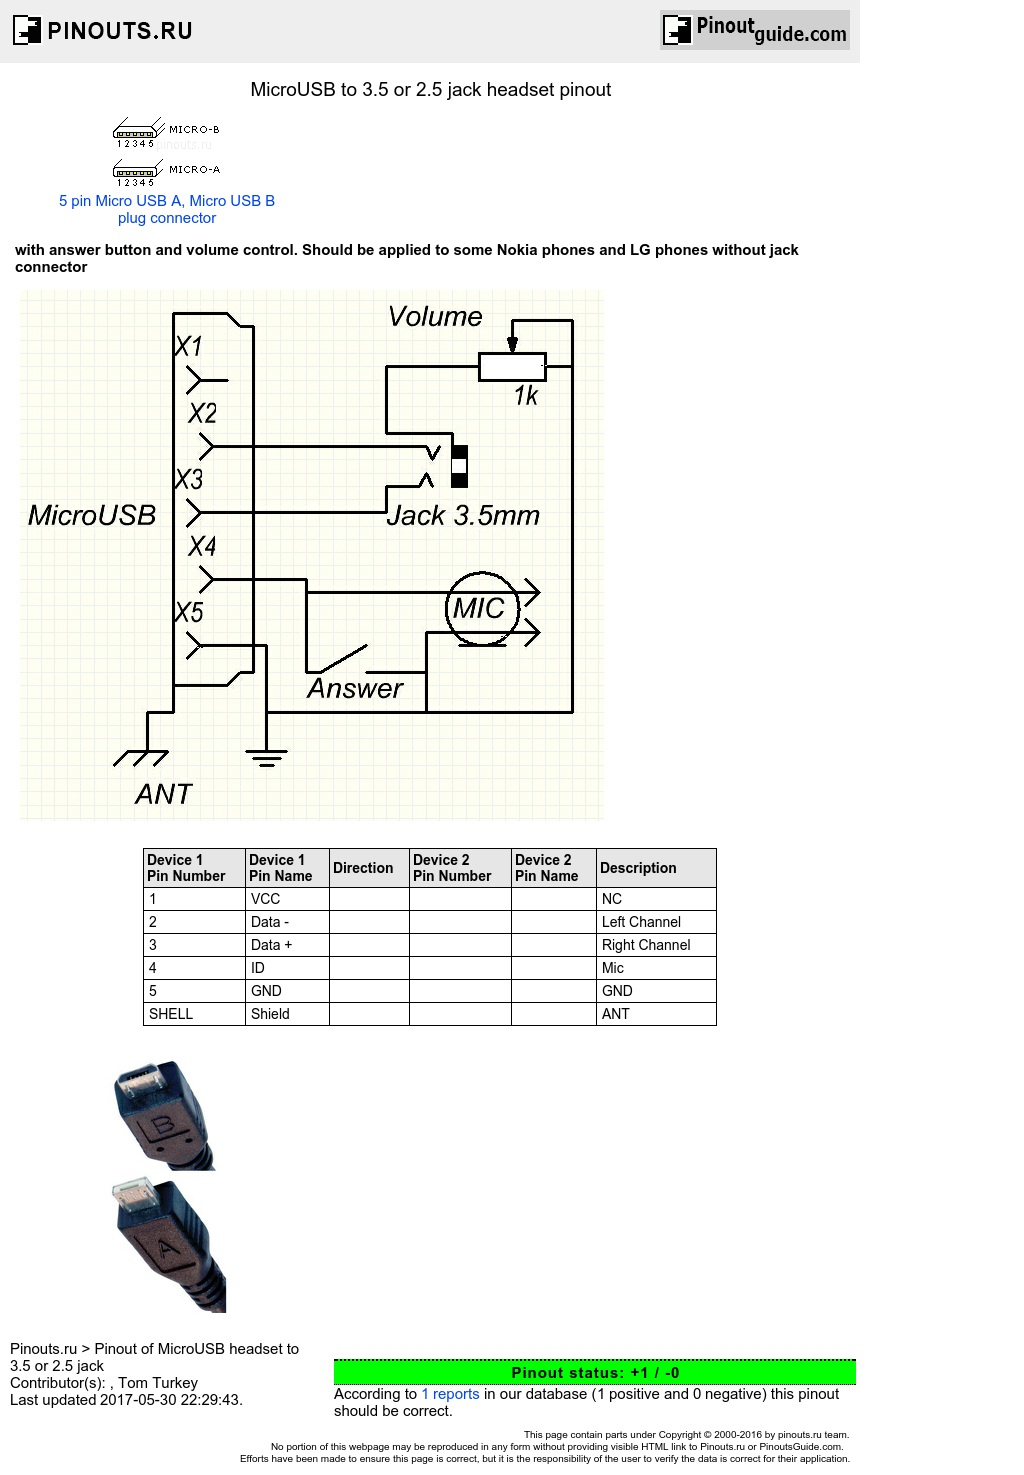 Microusb To 3.5 Or 2.5 Jack Headset Pinout Diagram @ Pinoutguide - 3.5 Mm Headphone Jack Wiring Diagram